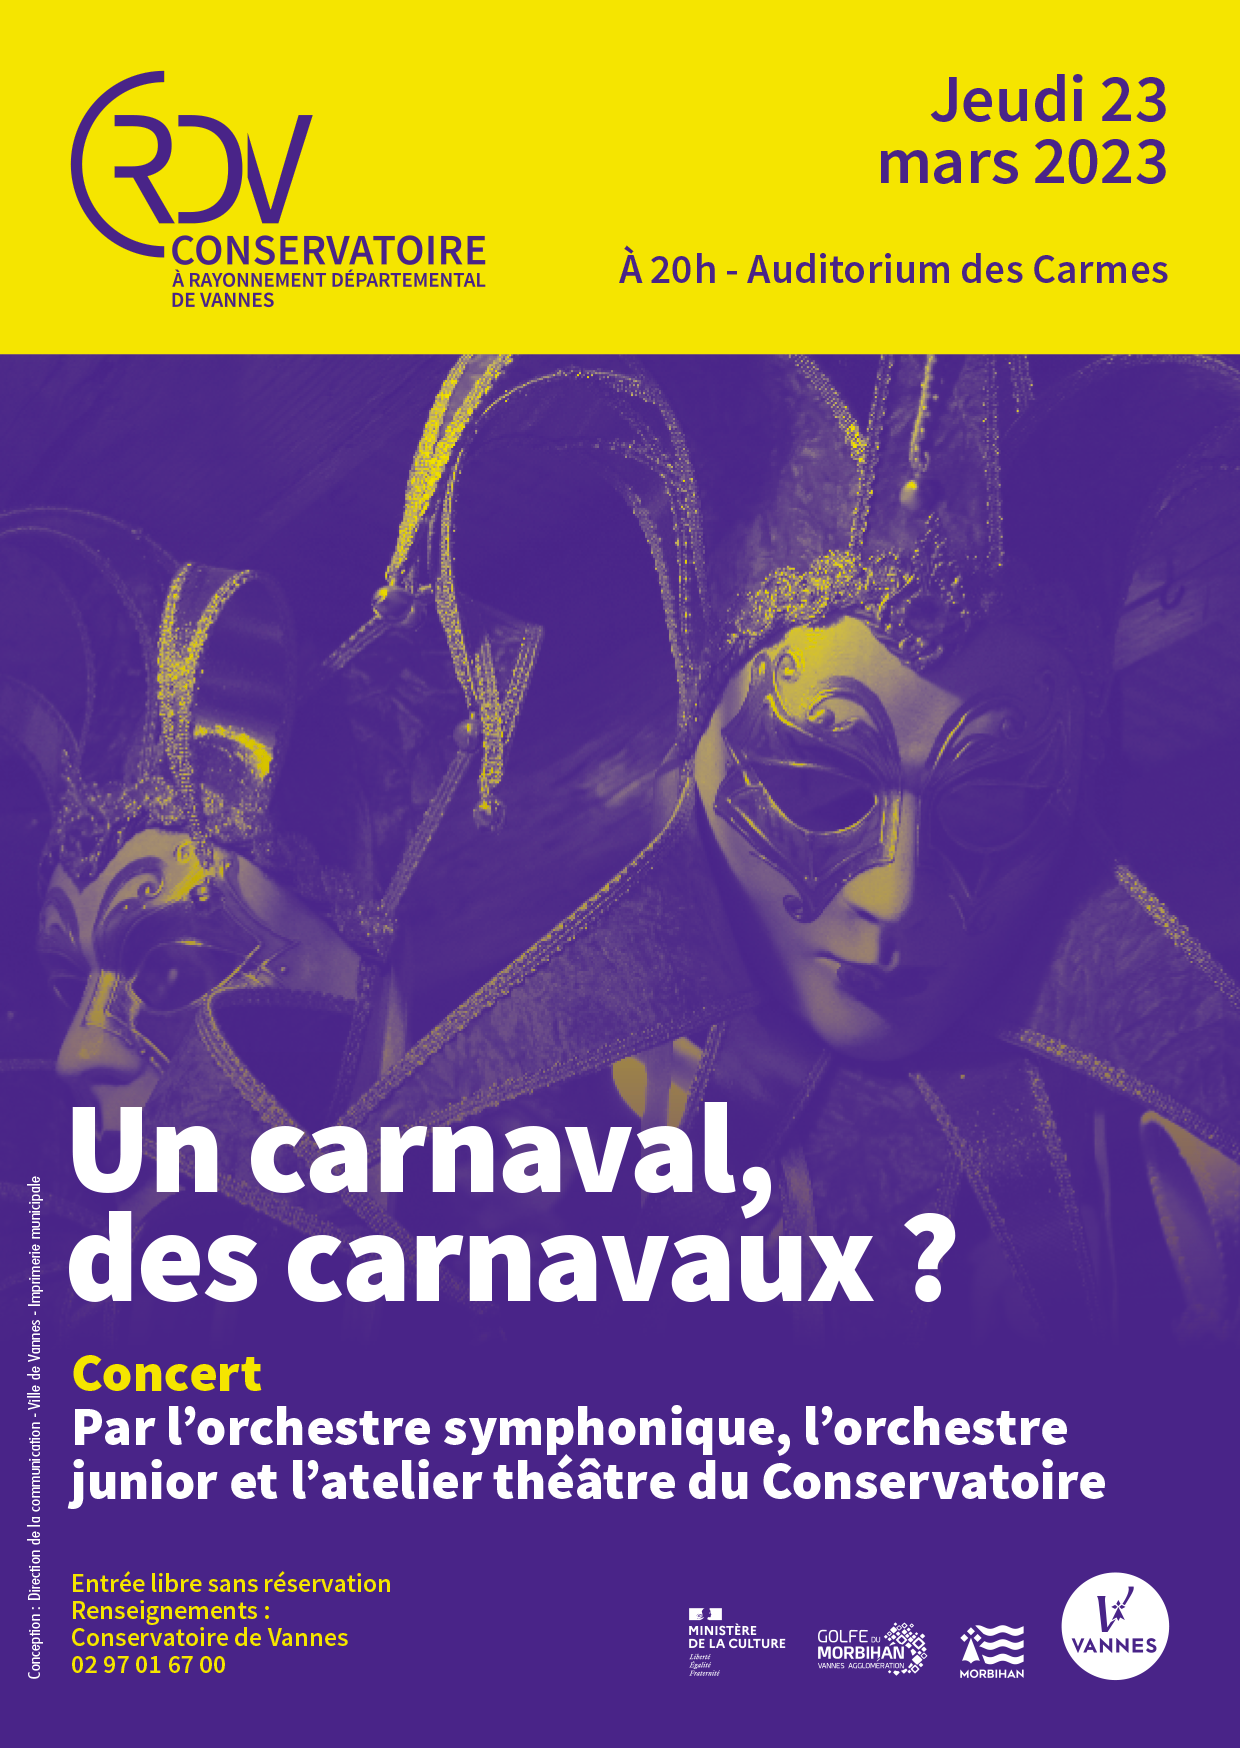 Carnaval des carnavaux